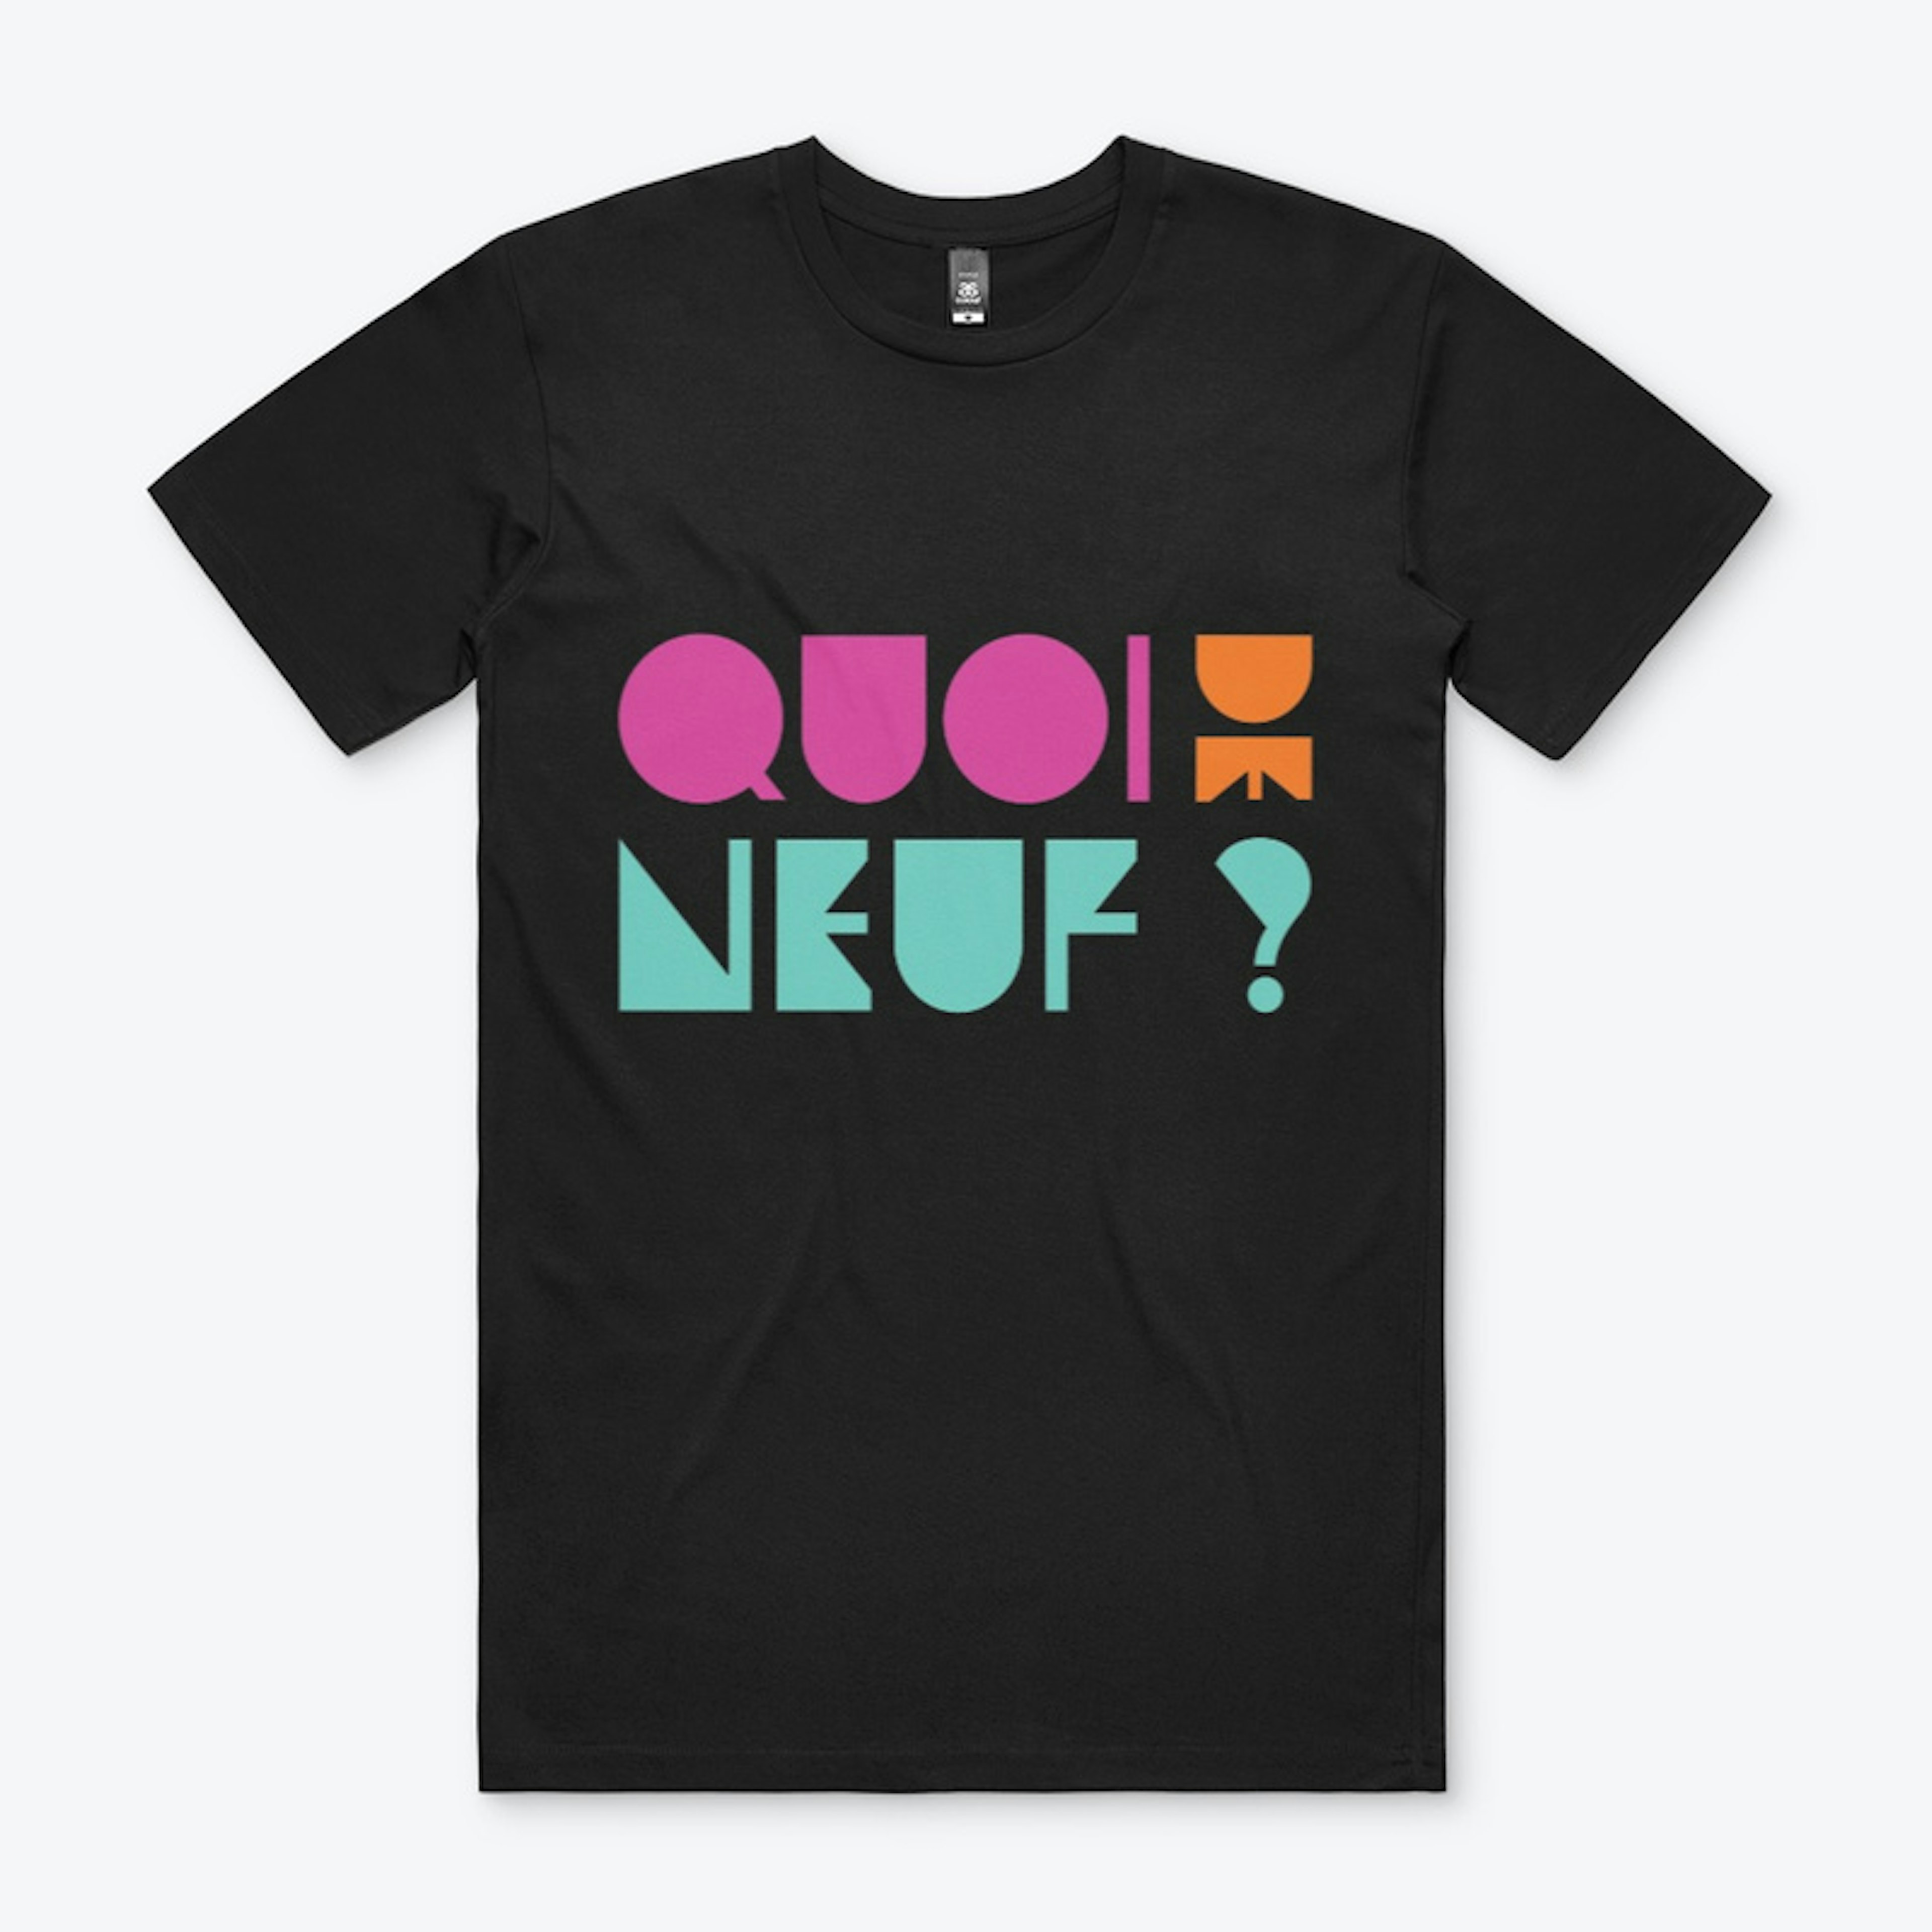 Quoi de Neuf? (What's Up?)